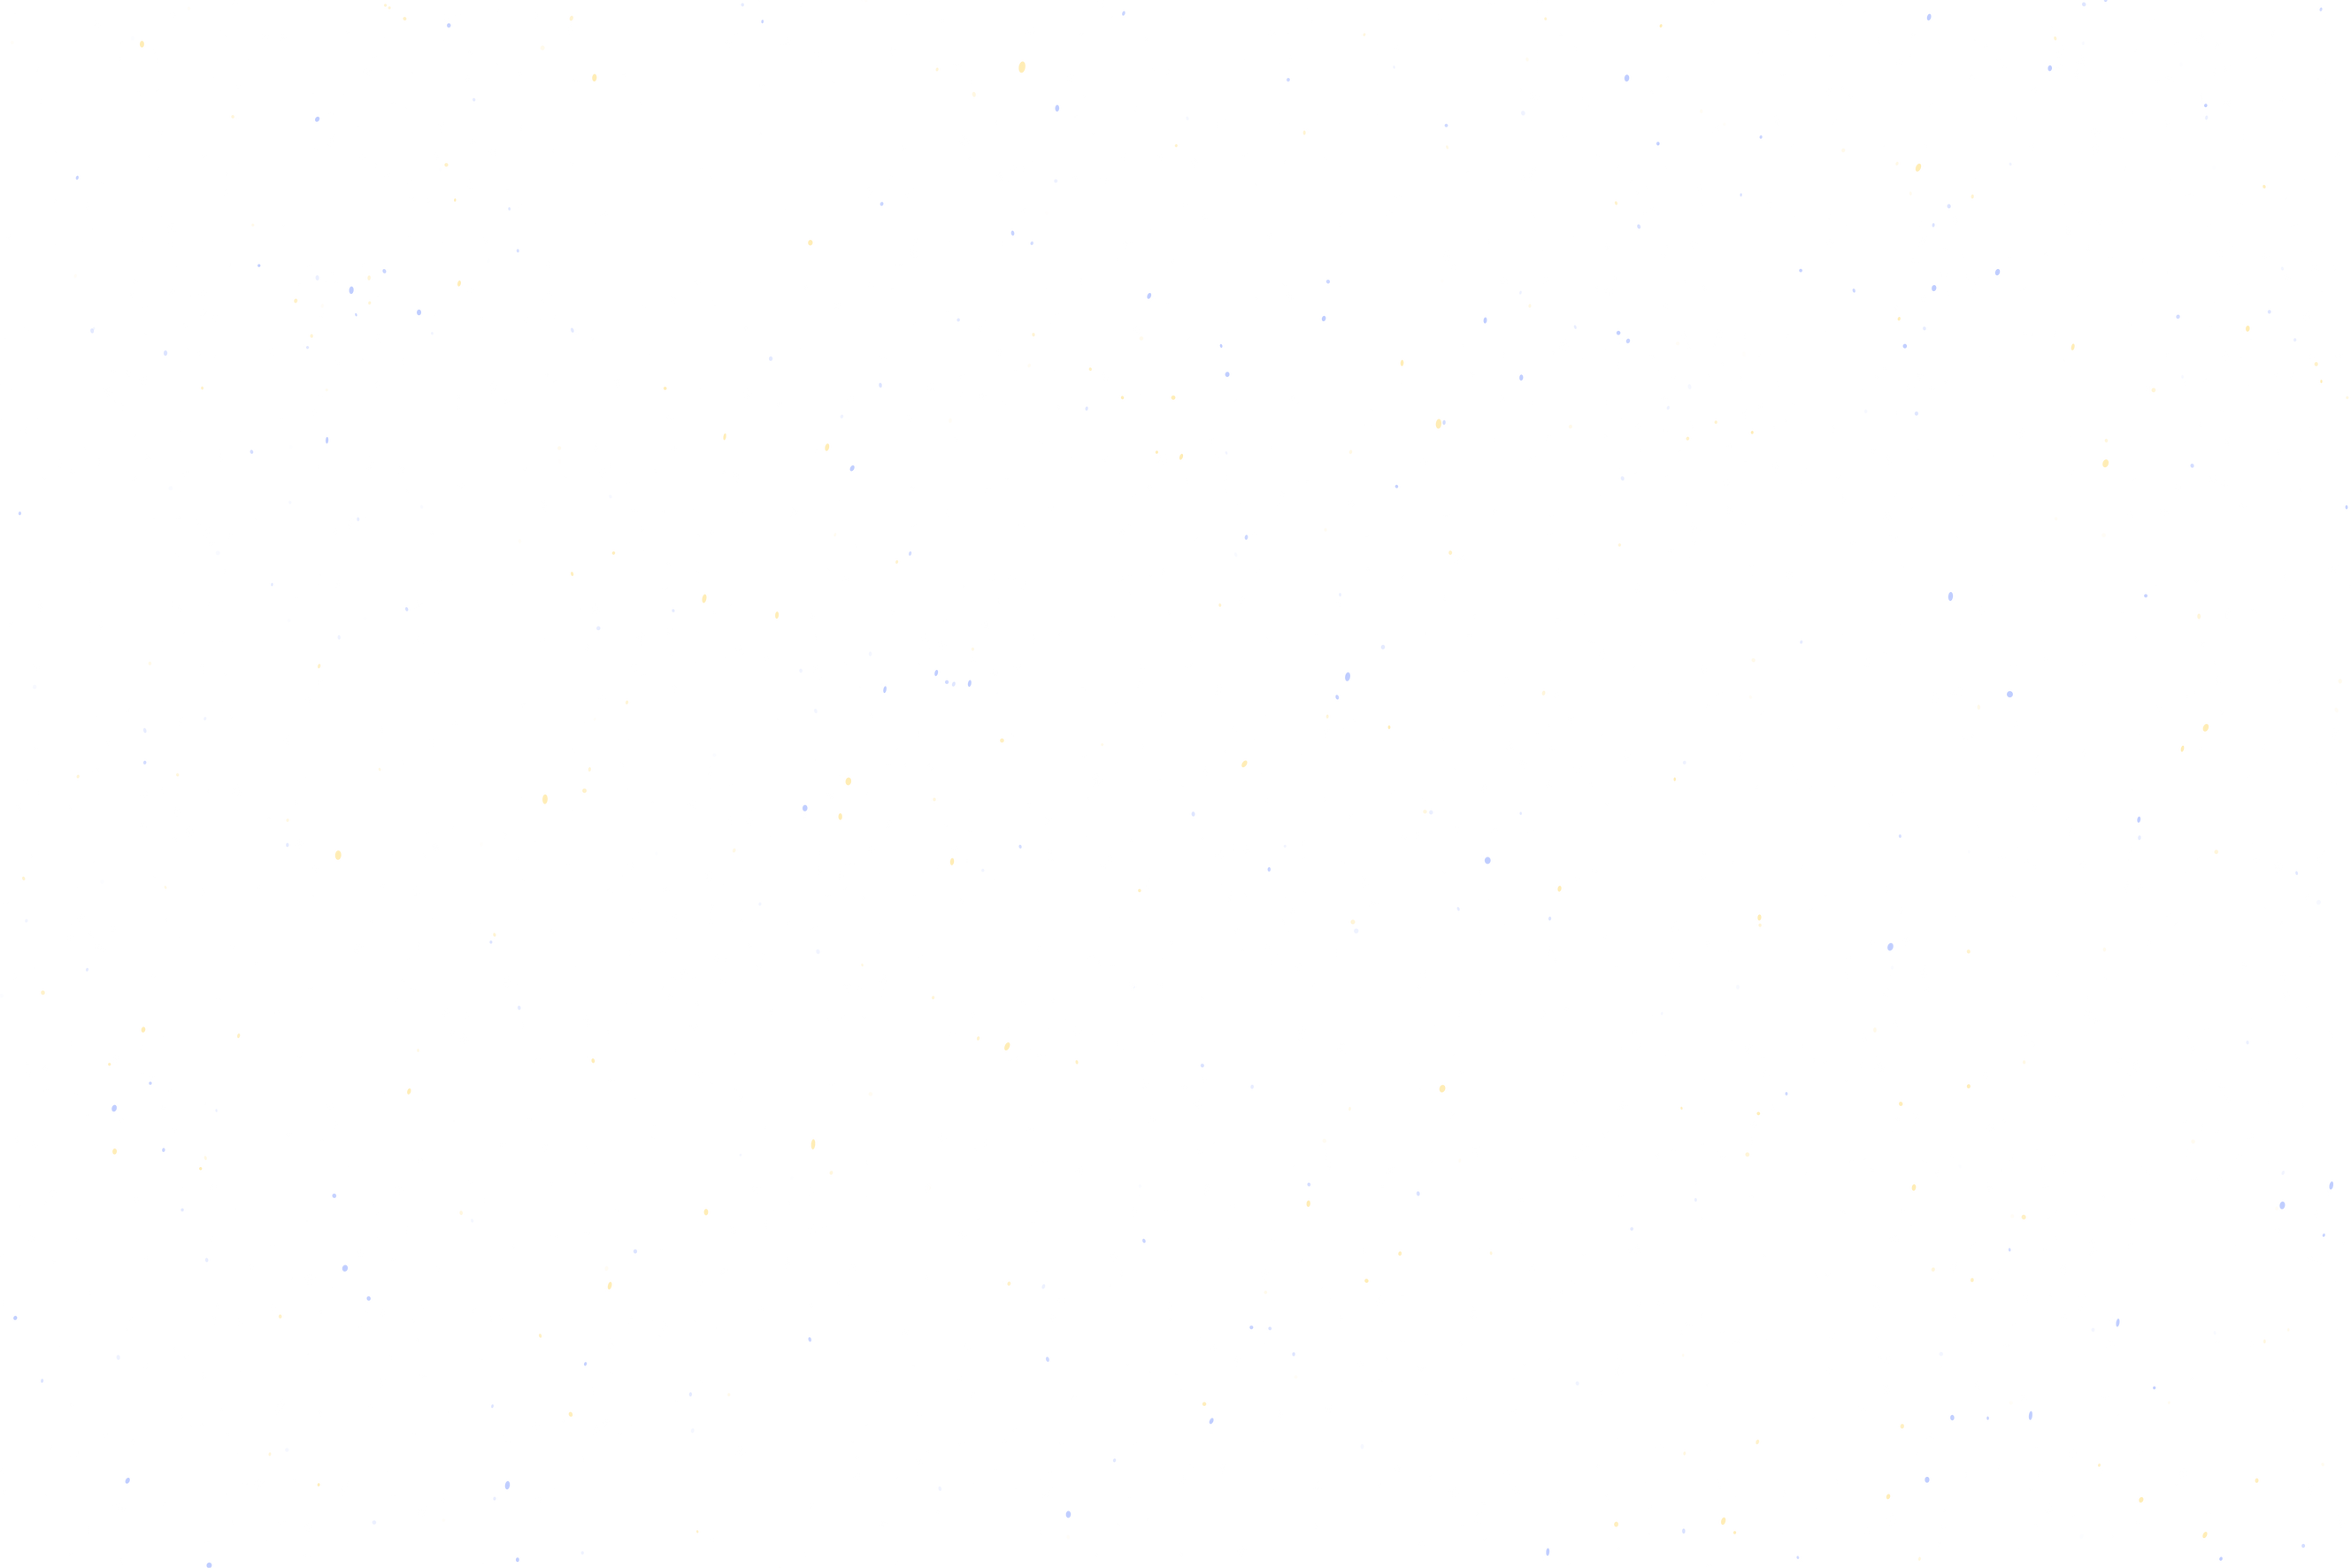 Night sky stars isolated